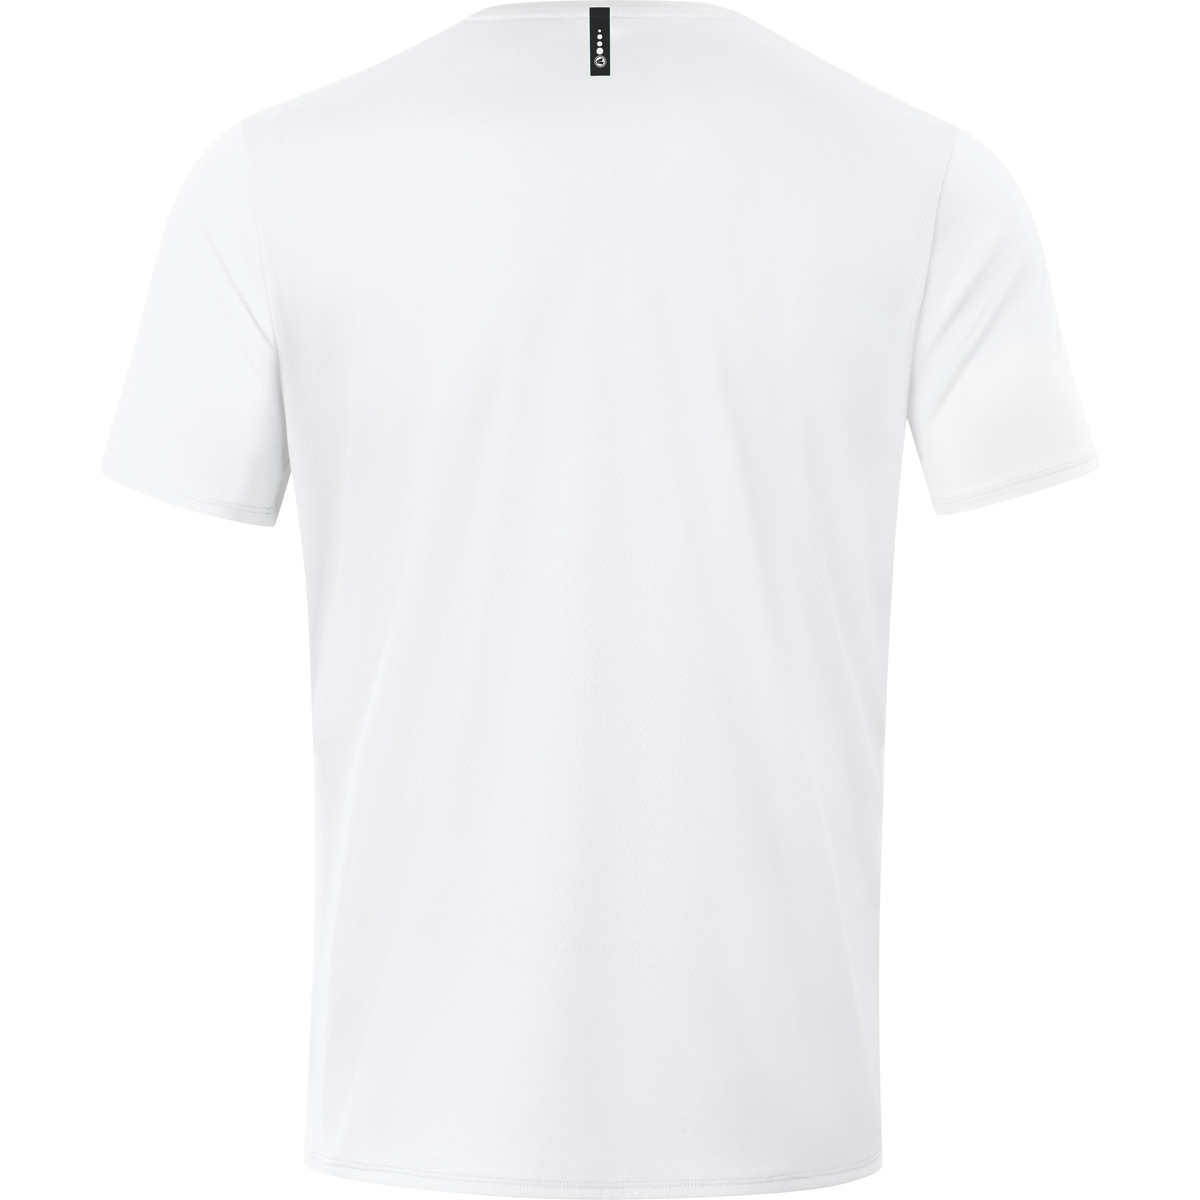 JAKO T-Shirt Champ 2.0 116, 6120 Gr. weiß, Kinder